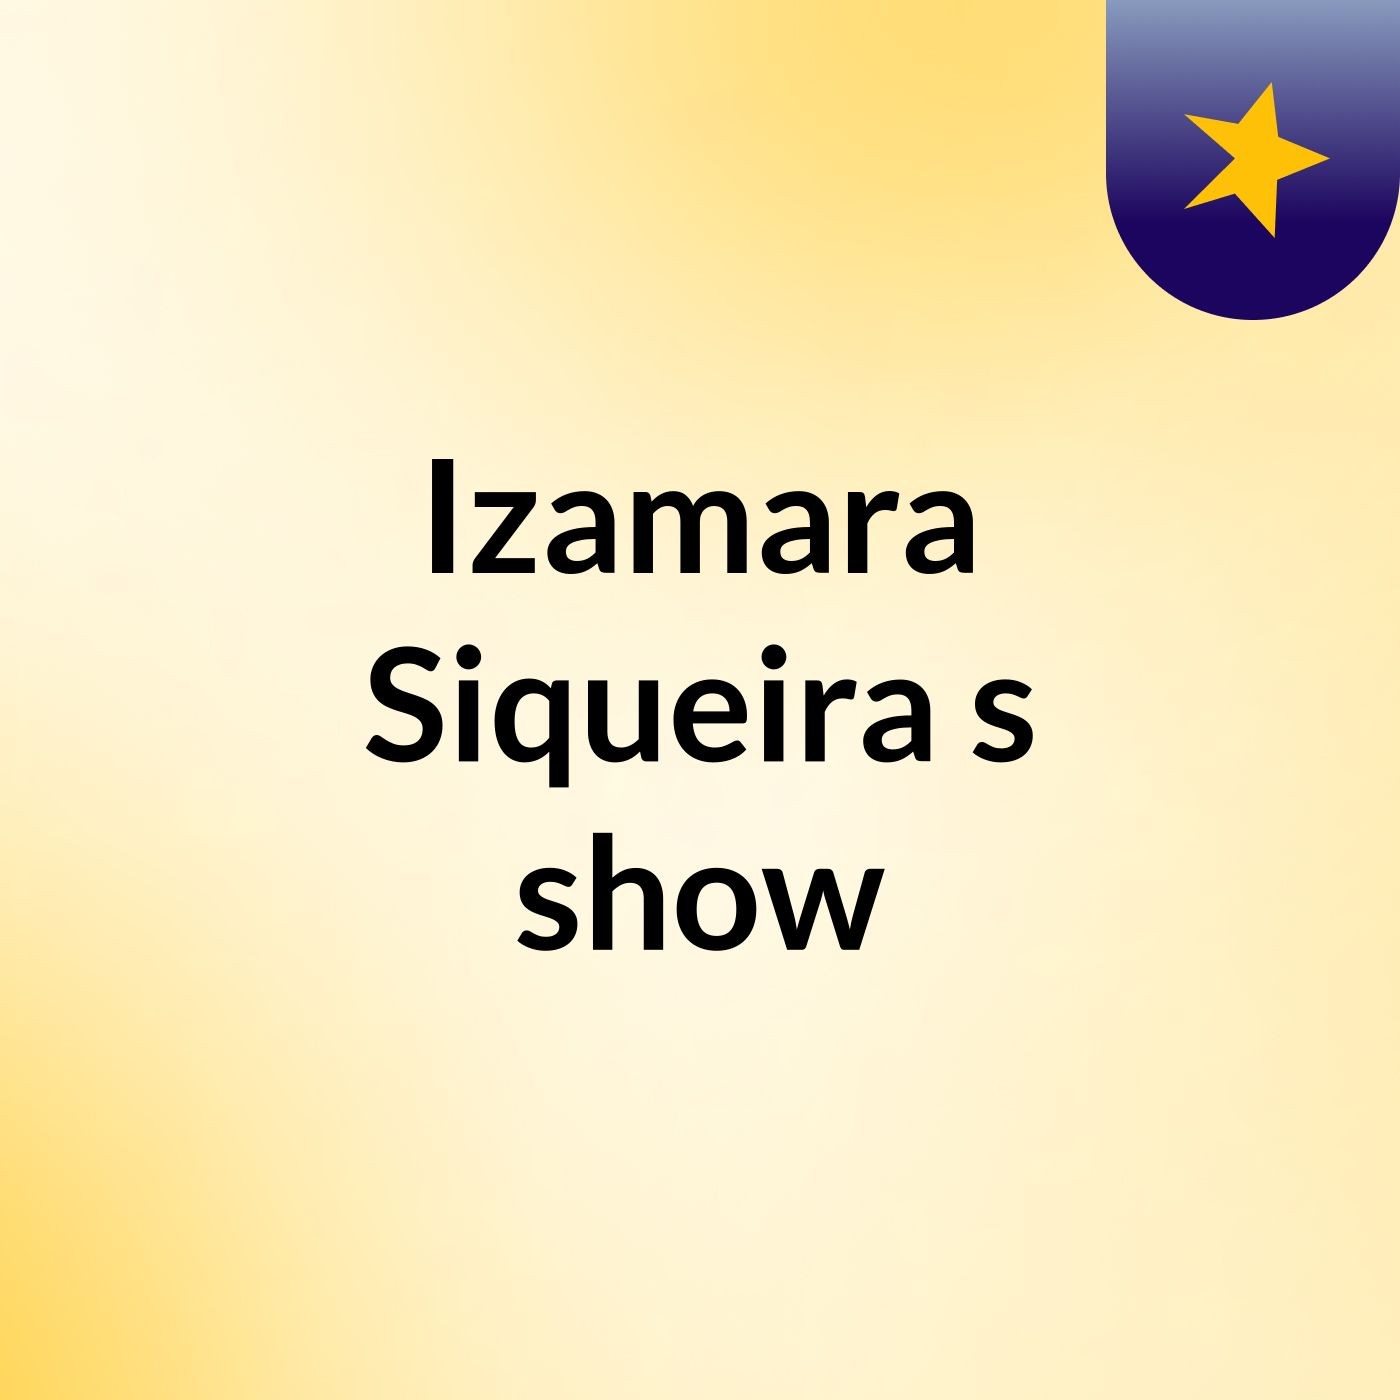 Izamara Siqueira's show